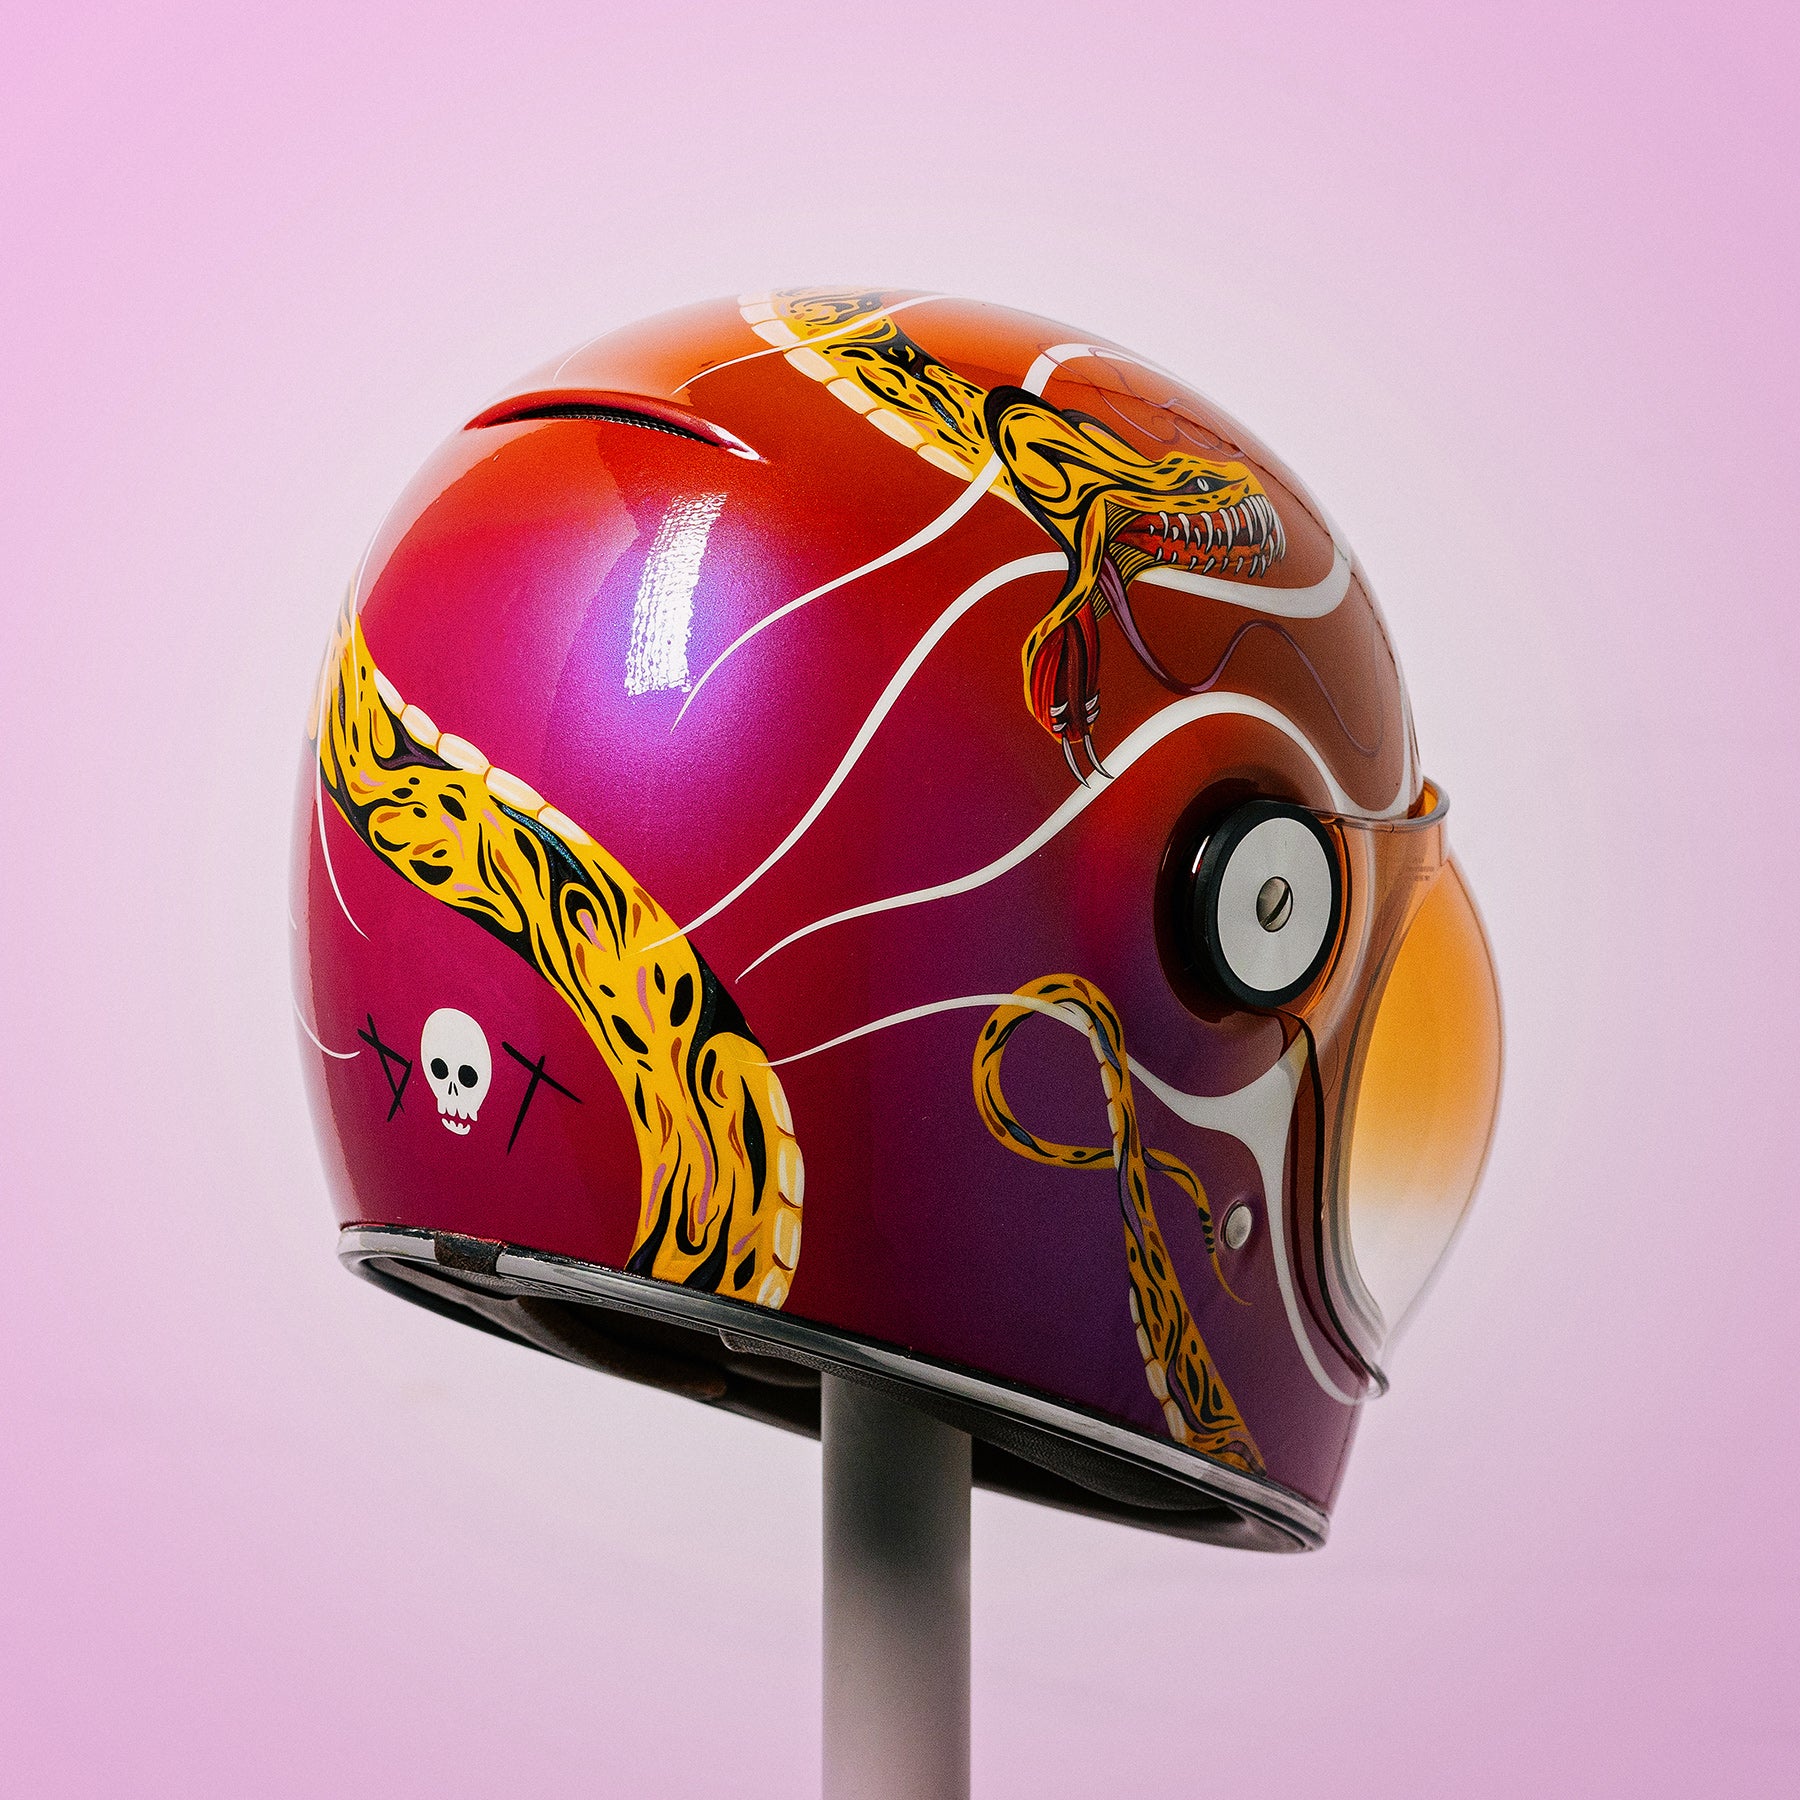 Trippy Ten helmet art show Pittsburgh Glory Daze motorcycle show Bell Helmets Jennie Coulson